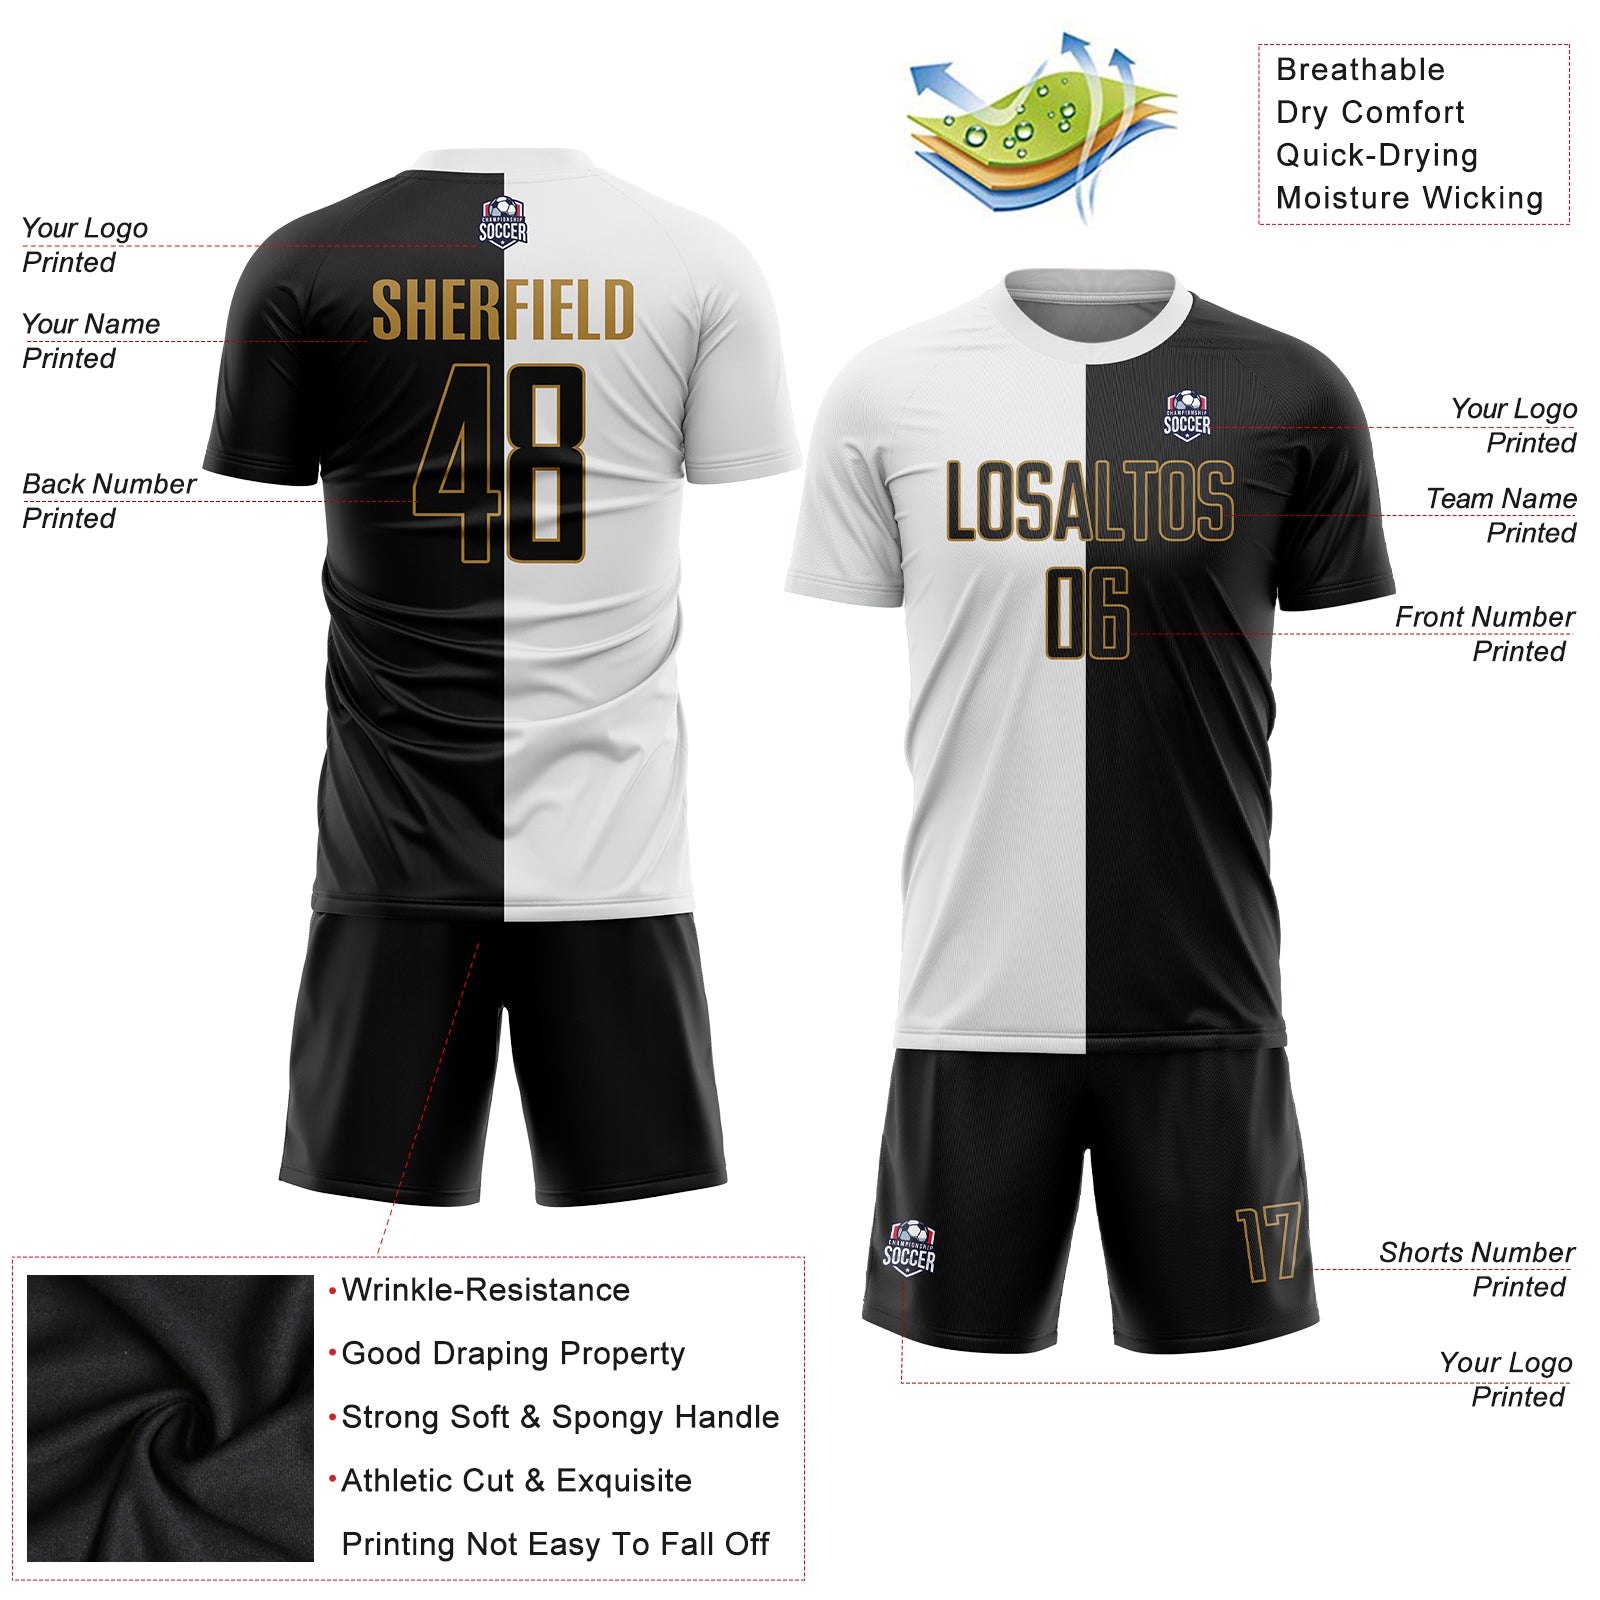 Custom White Black-Old Gold Sublimation Split Fashion Soccer Uniform Jersey